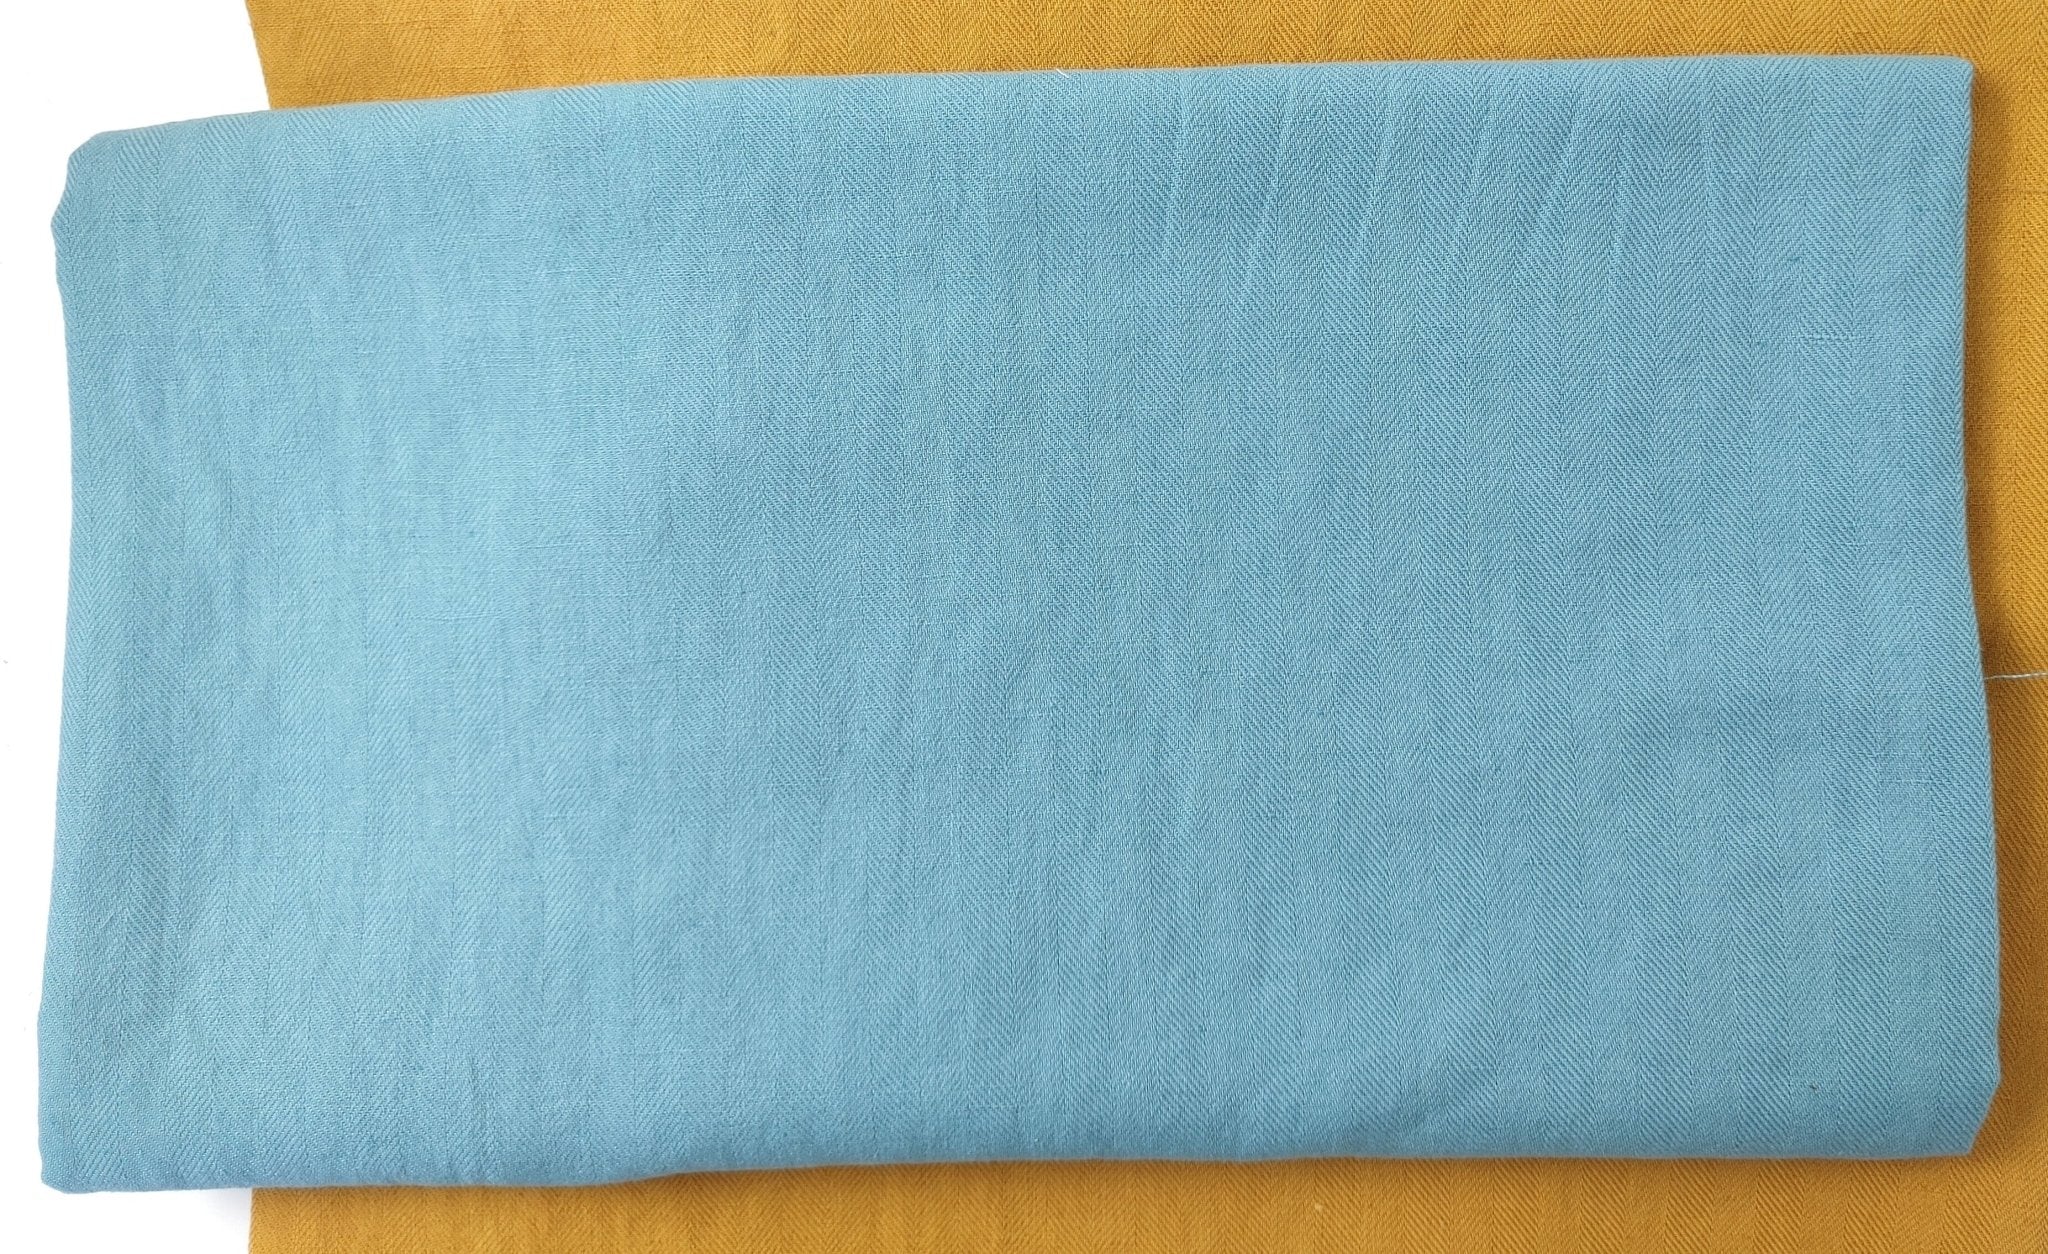 Linen Cotton HBT Herringbone Twill Solid Fabric Medium Weight 6678 6707 6820 7095 7659 7660 7661 - The Linen Lab - Blue